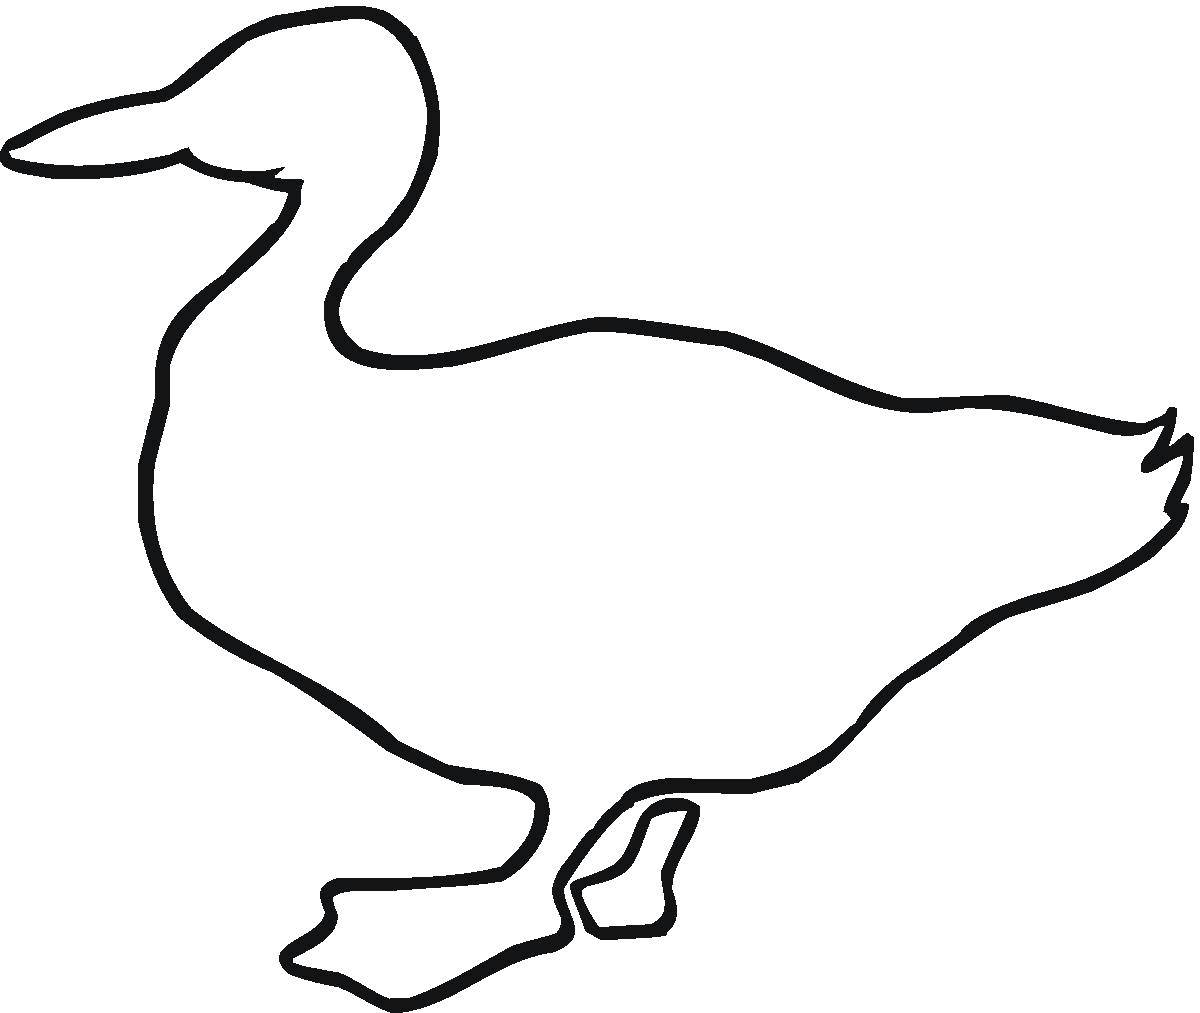 Coloring Contour ducks. Category birds. Tags:  Poultry, duck.